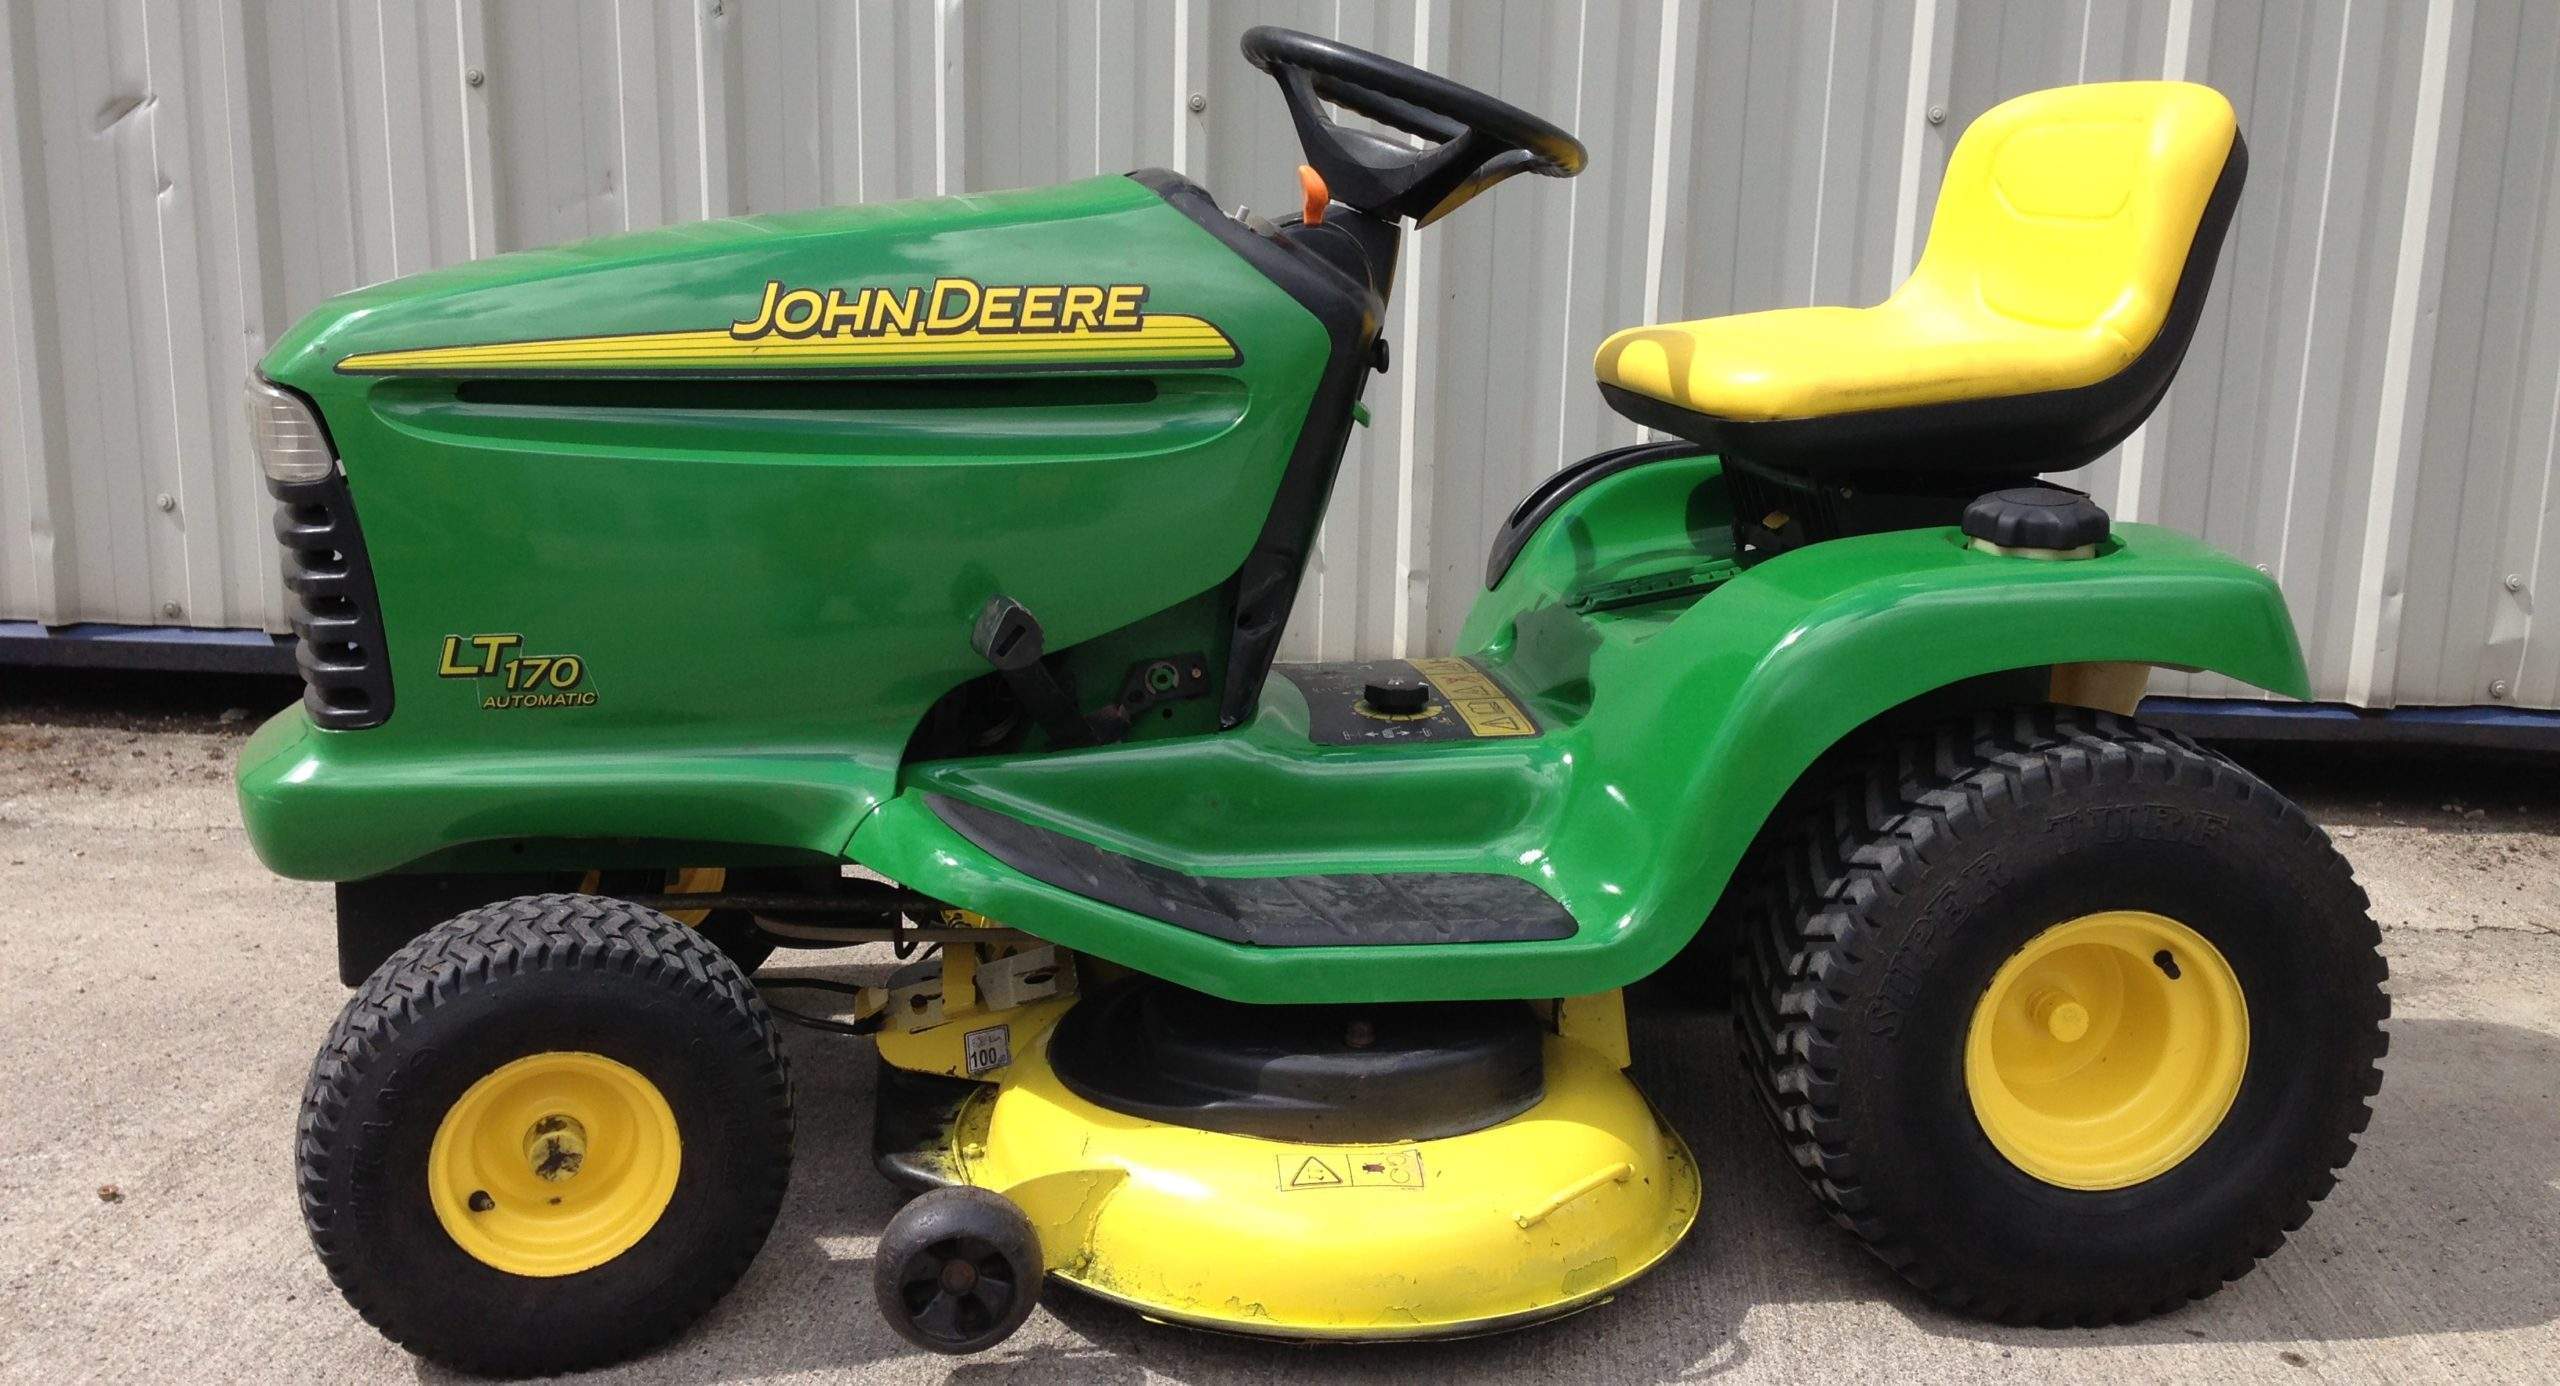 John Deere Lt170 Lawn Tractor Maintenance Guide Parts List